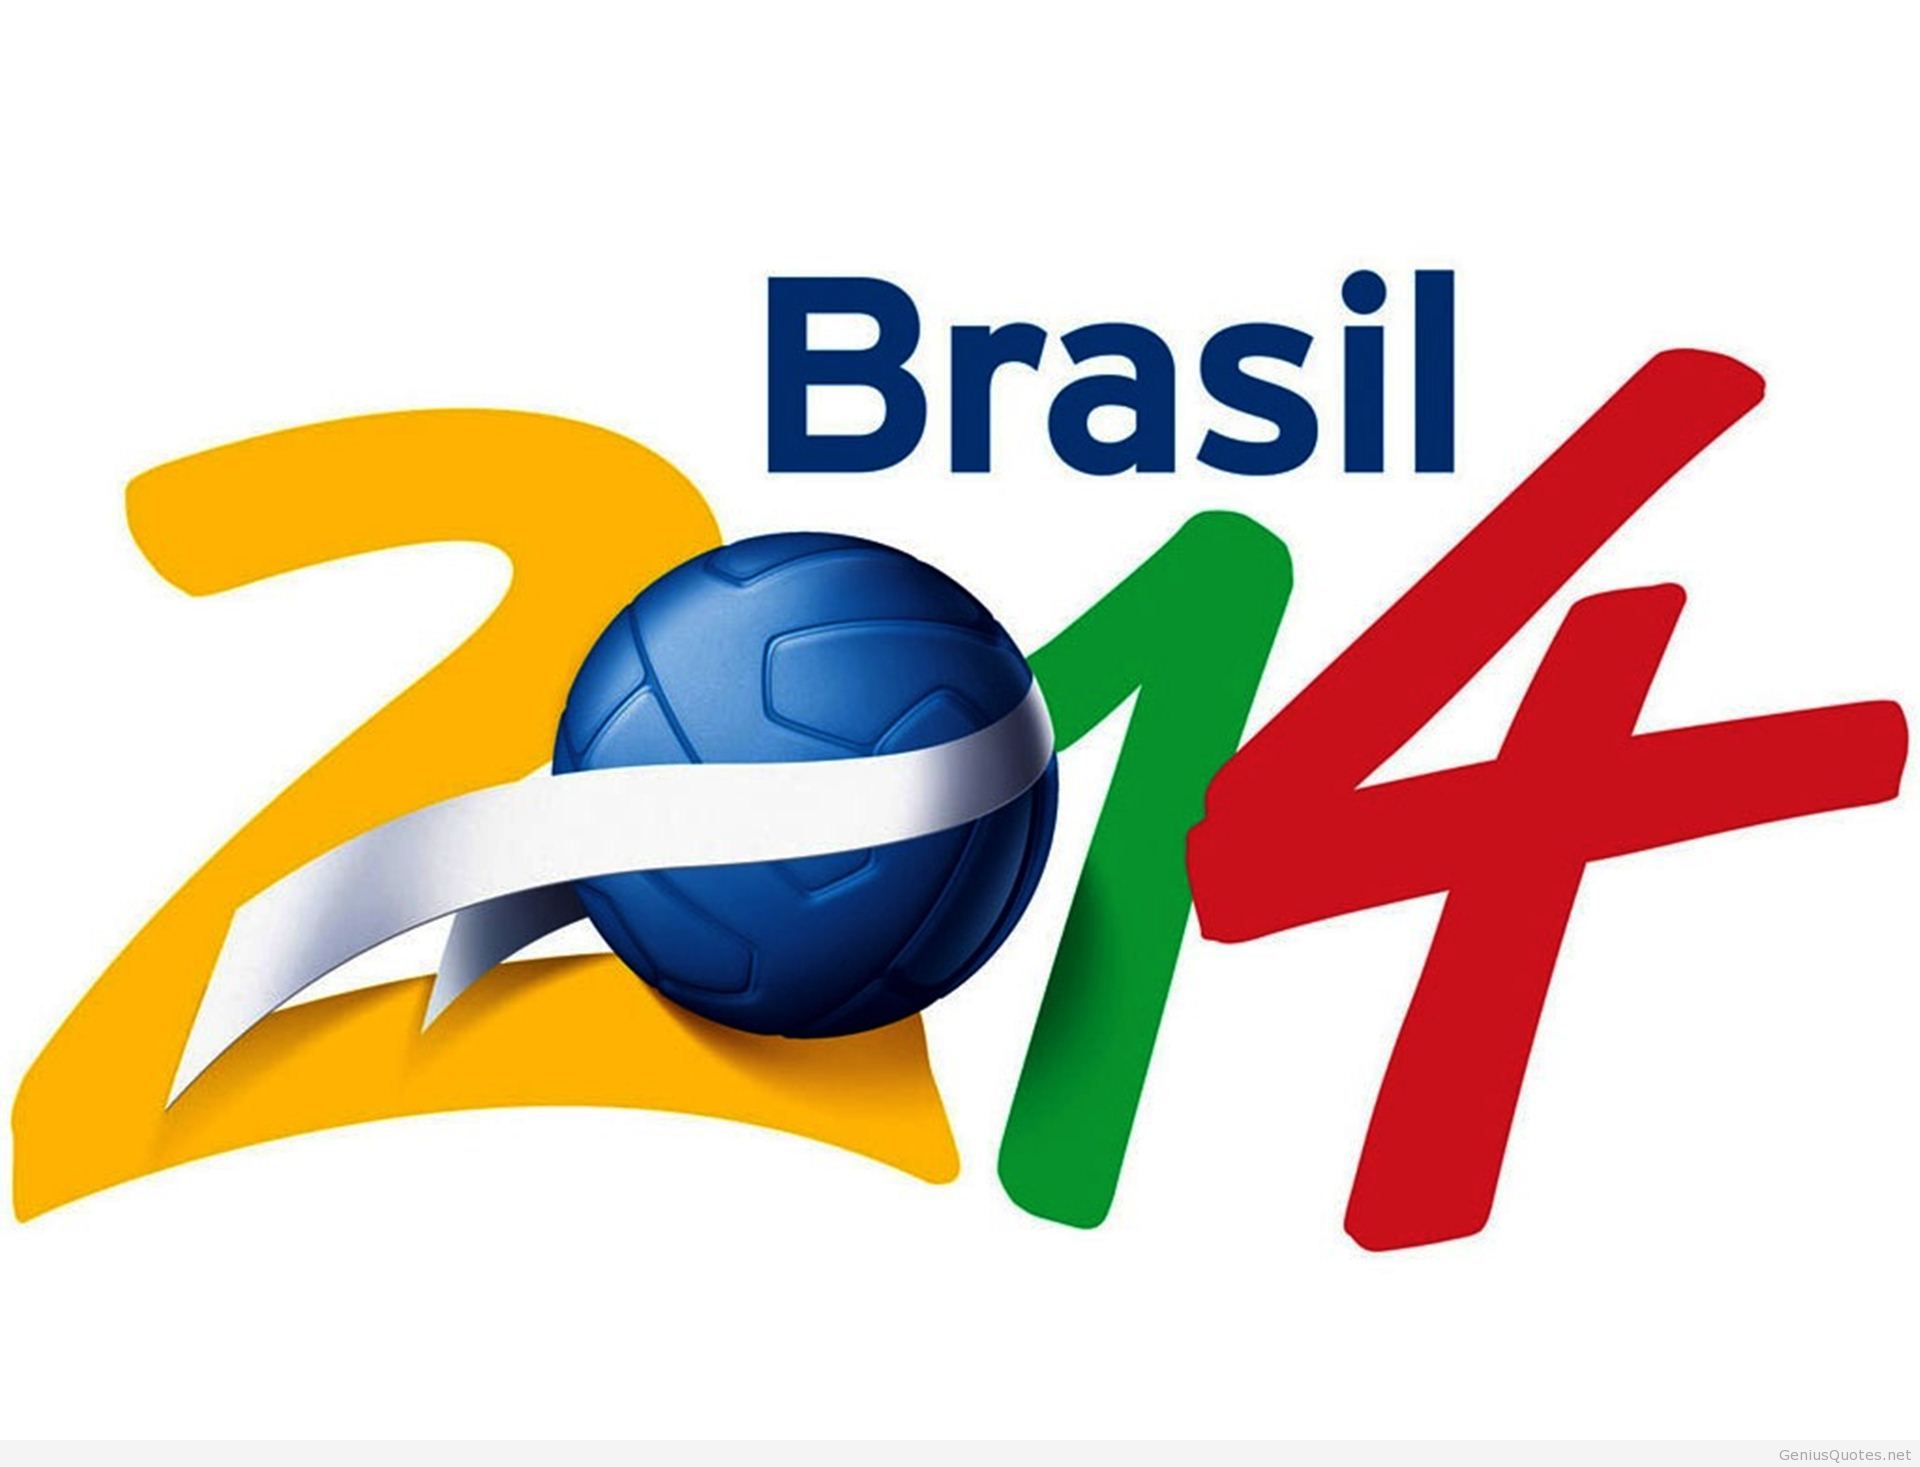 fifa world cup brazil 2014 Clip Art | clip art, clip art free ...